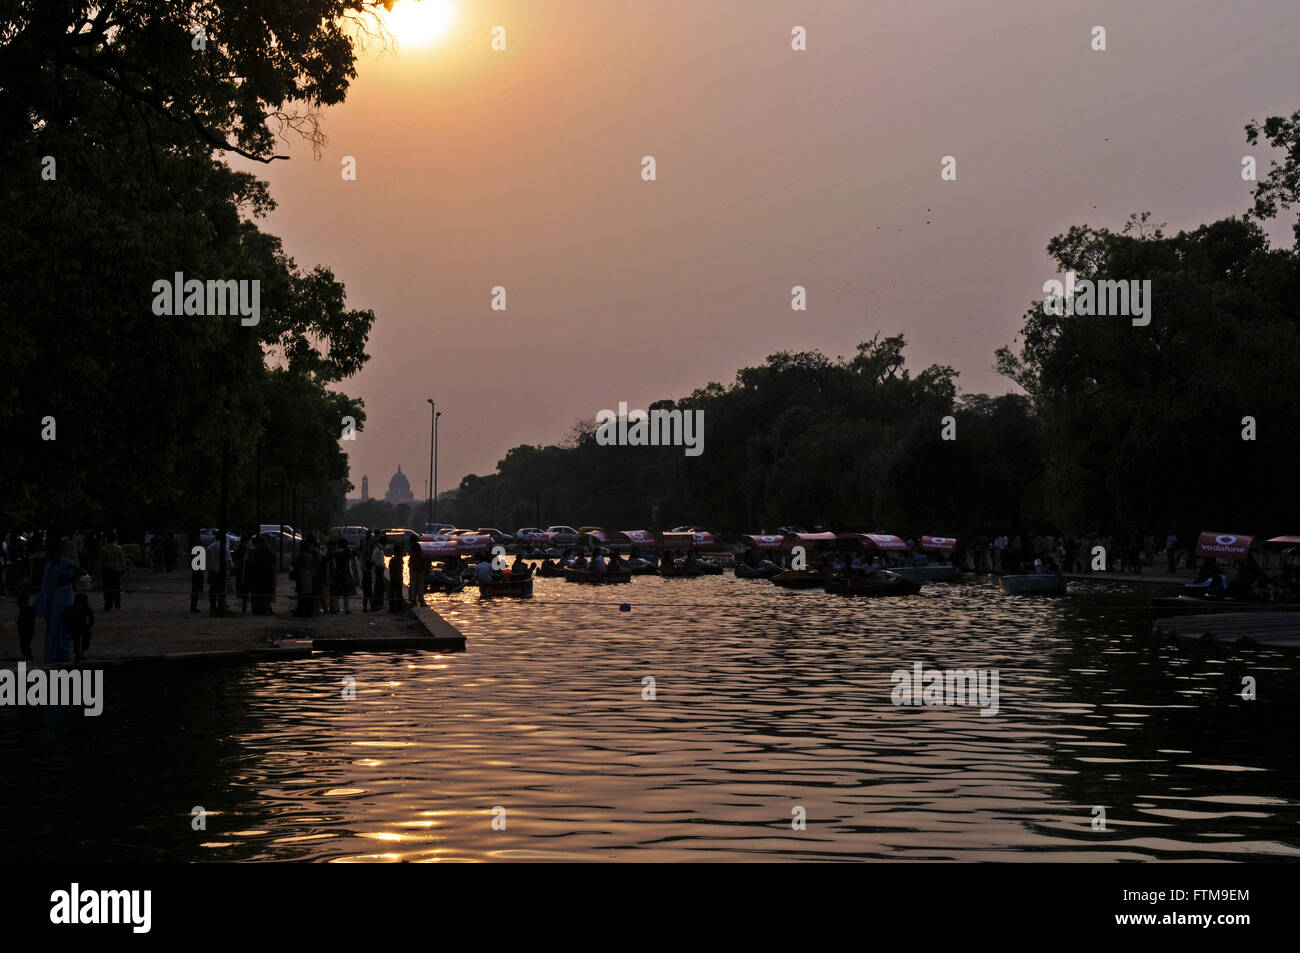 Pond in park in india Gate in the city of New Delhi Stock Photo